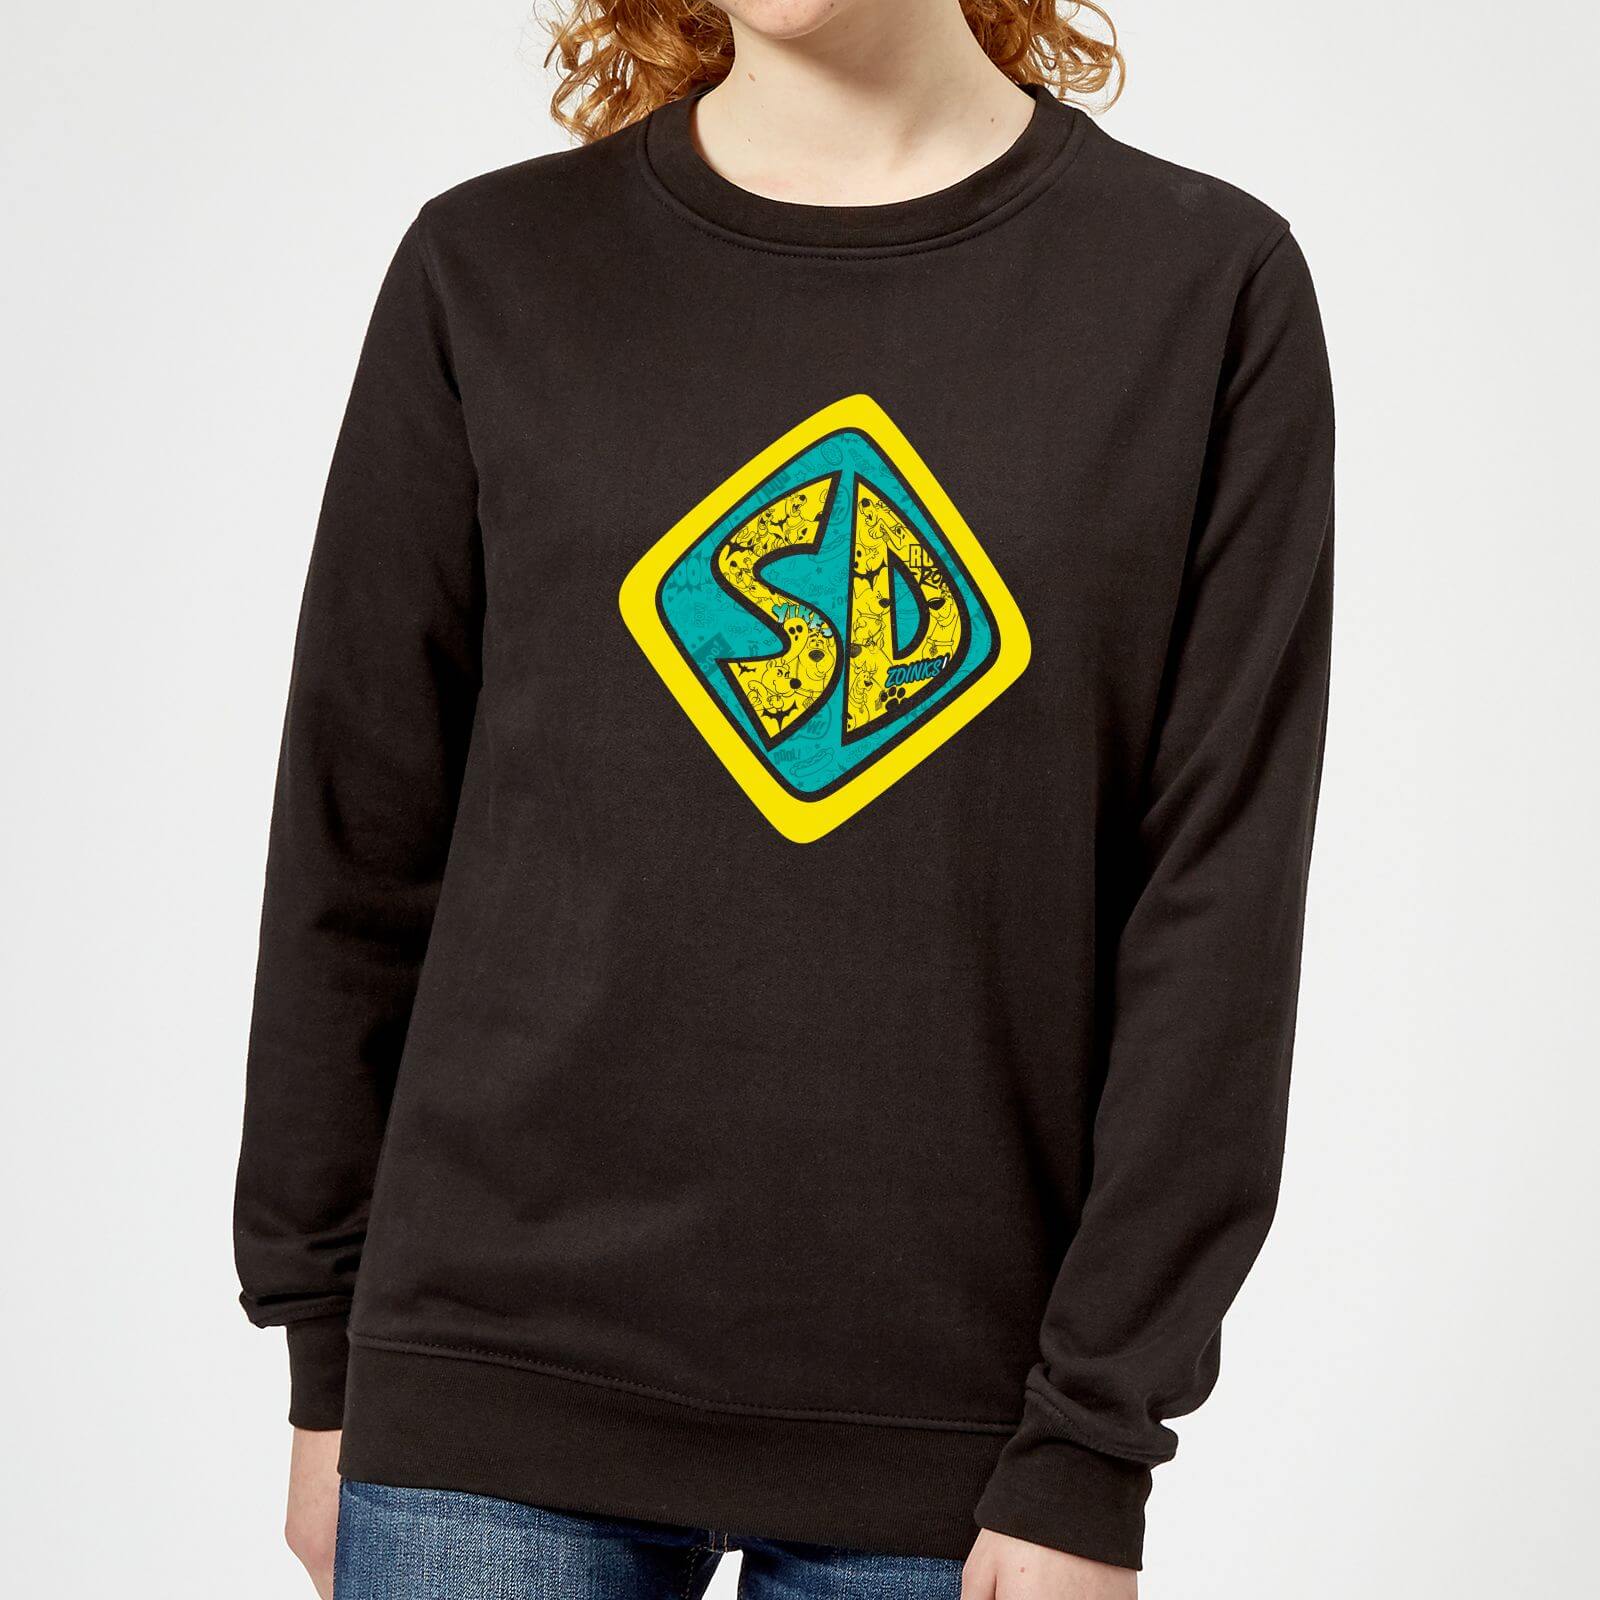 Scooby Doo Emblem Women's Sweatshirt - Black - XS - Black